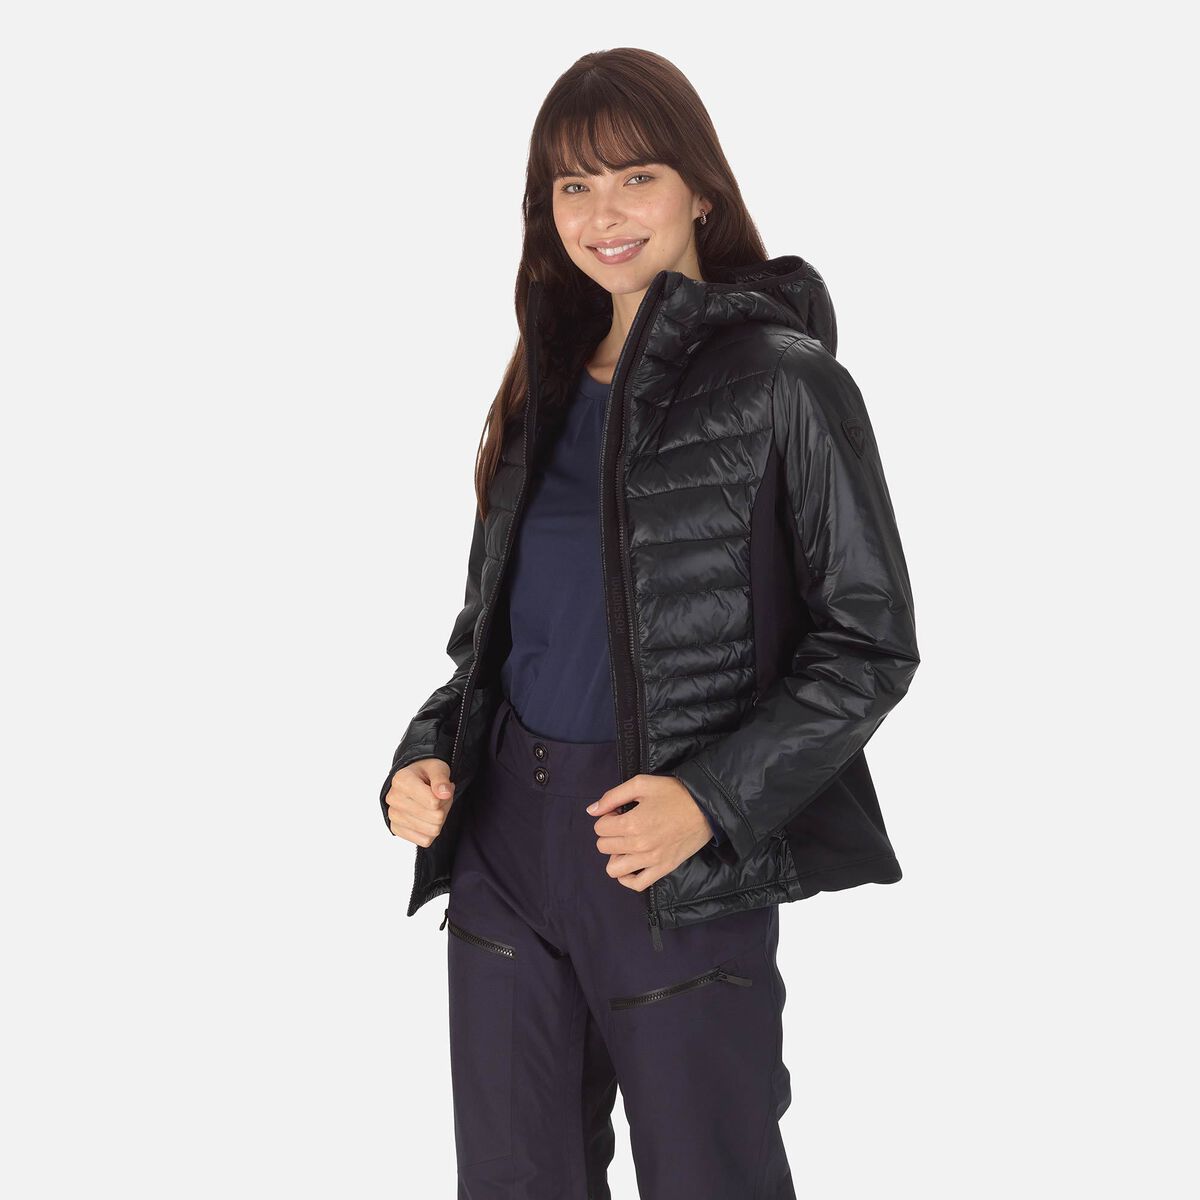 Rossignol Women's SKPR Hybrid Light Jacket Black